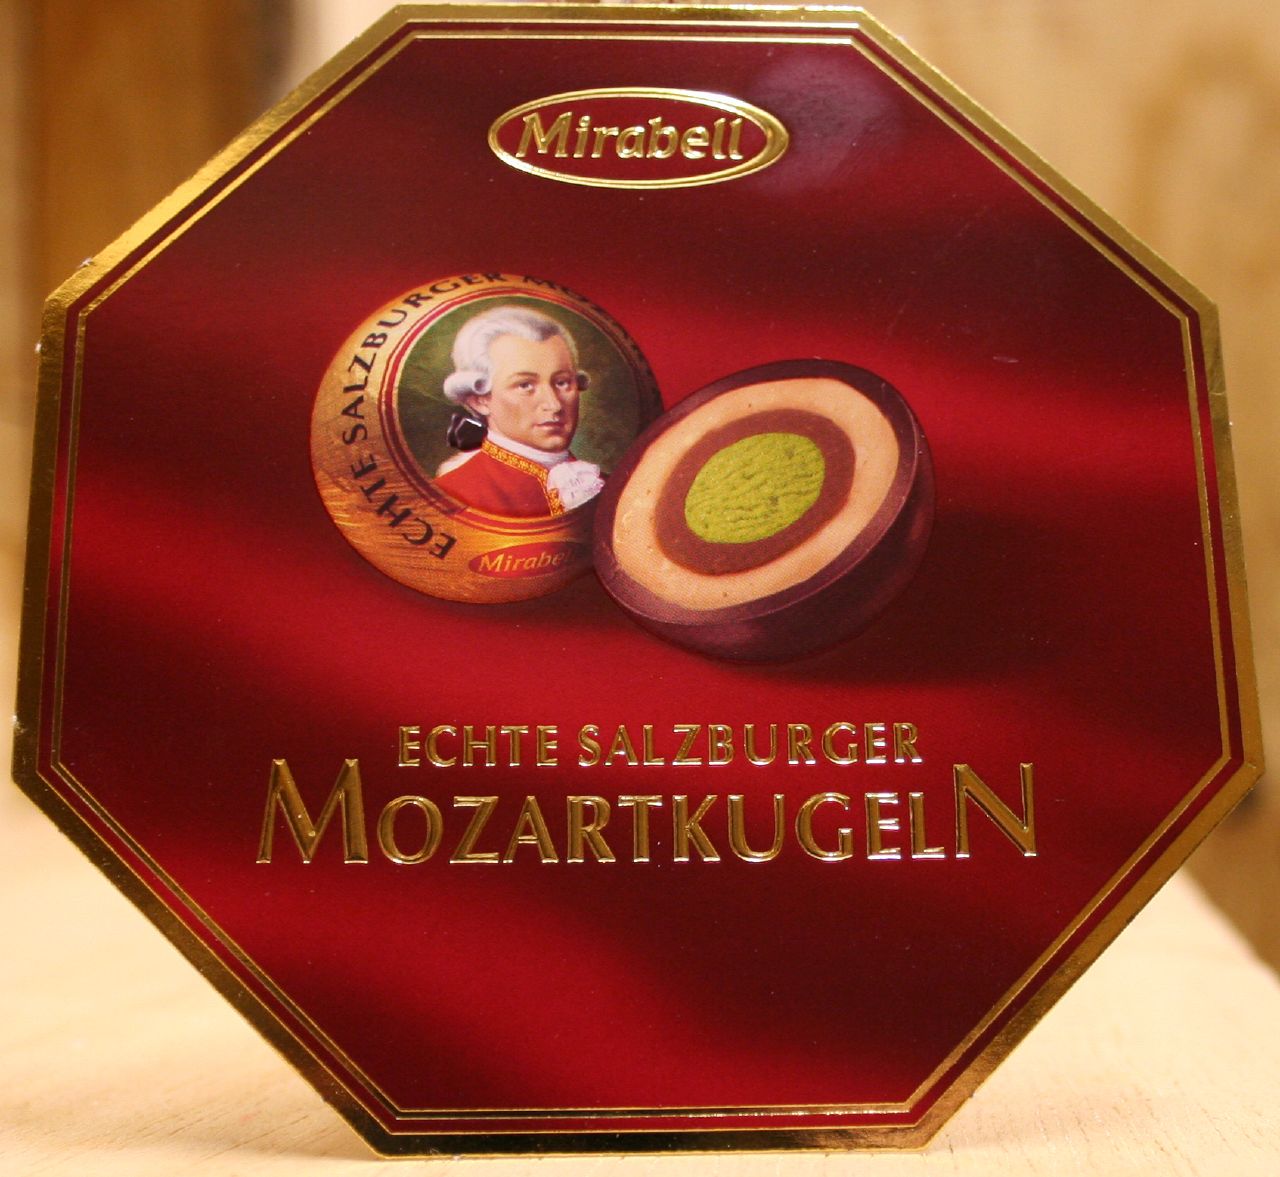 Echte Salzburger Mozart Kugeln - &amp;quot;Real Salzburg Mozart Balls&amp;quot; - a photo ...